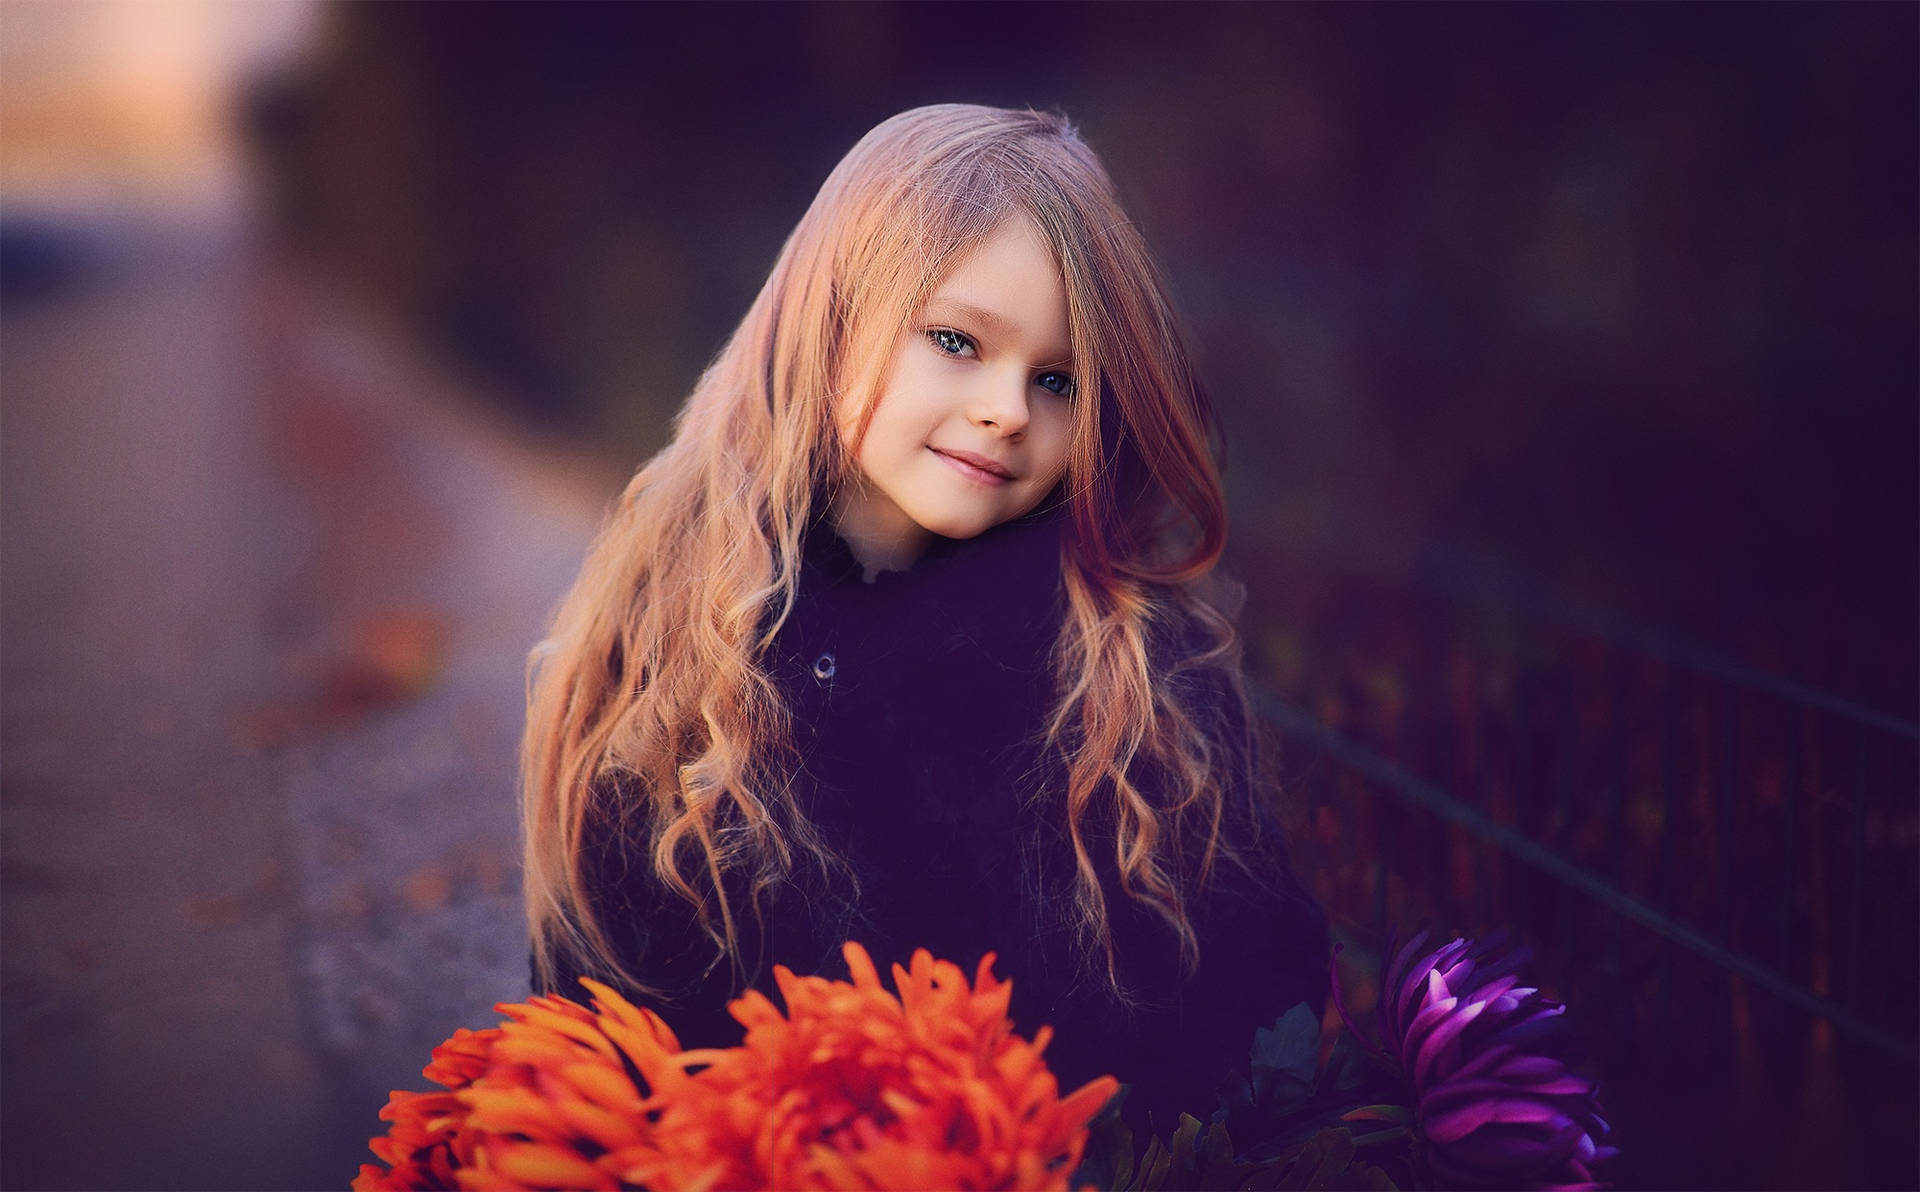 Cute Girl With Orange Flower Background